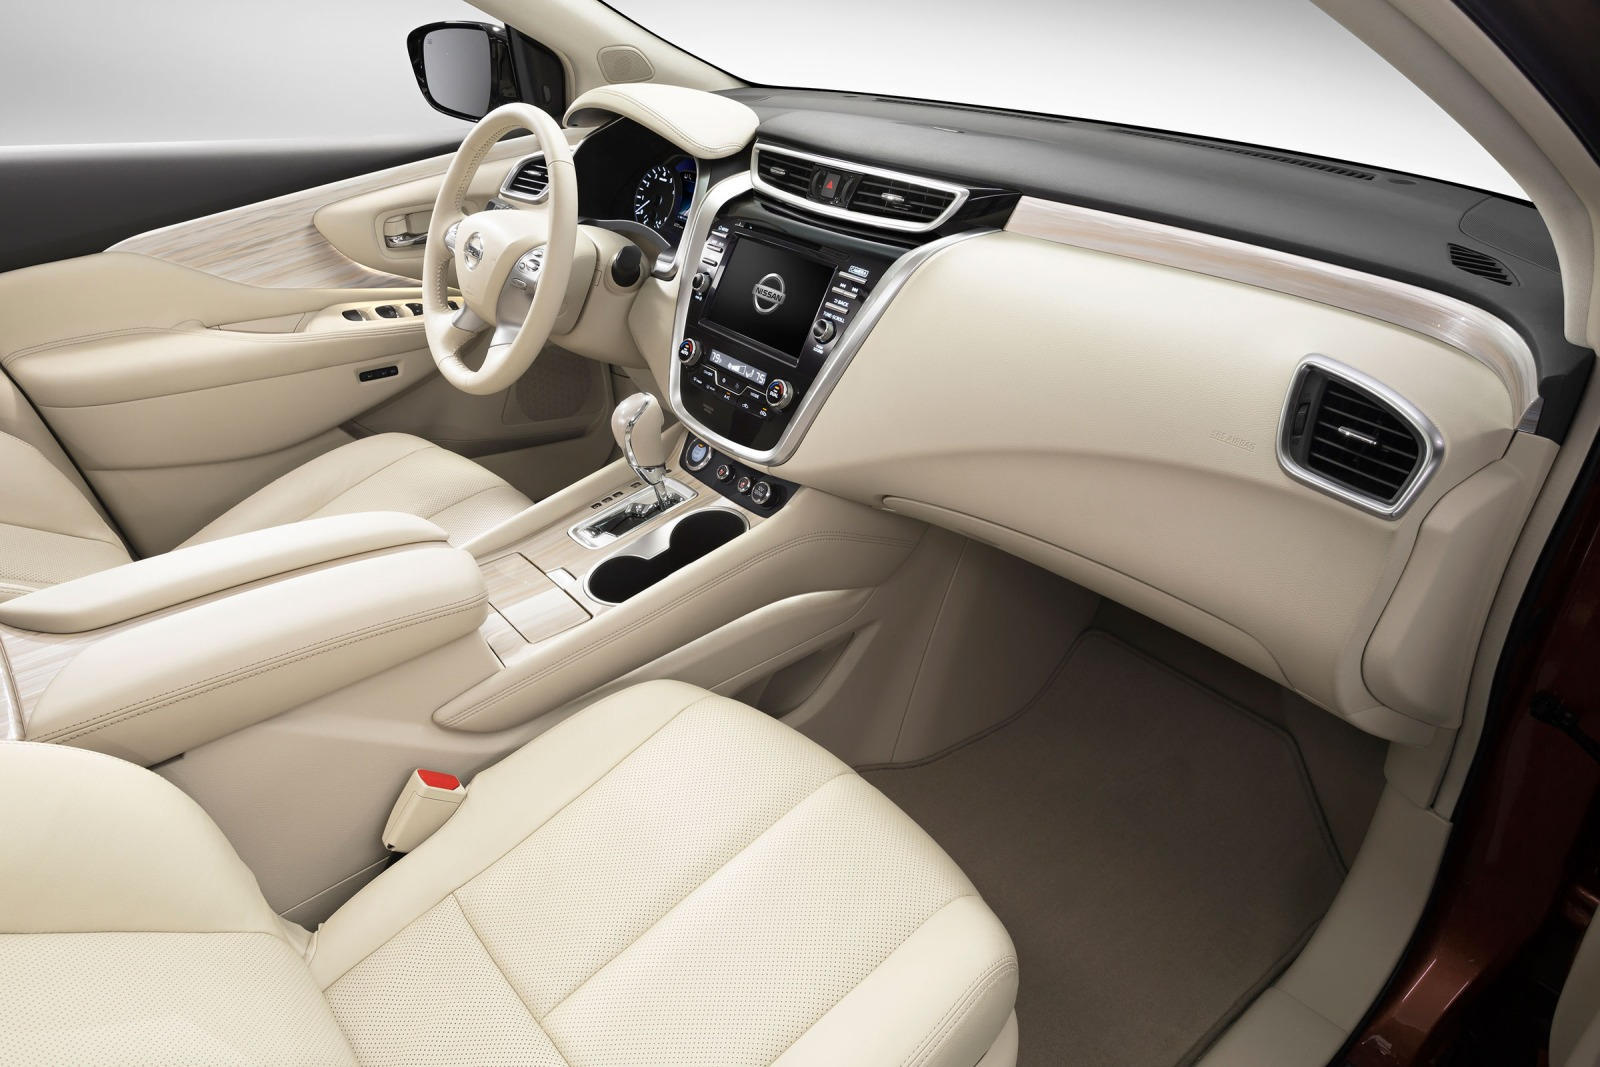 2016 Nissan Murano Hybrid Interior Photos | CarBuzz